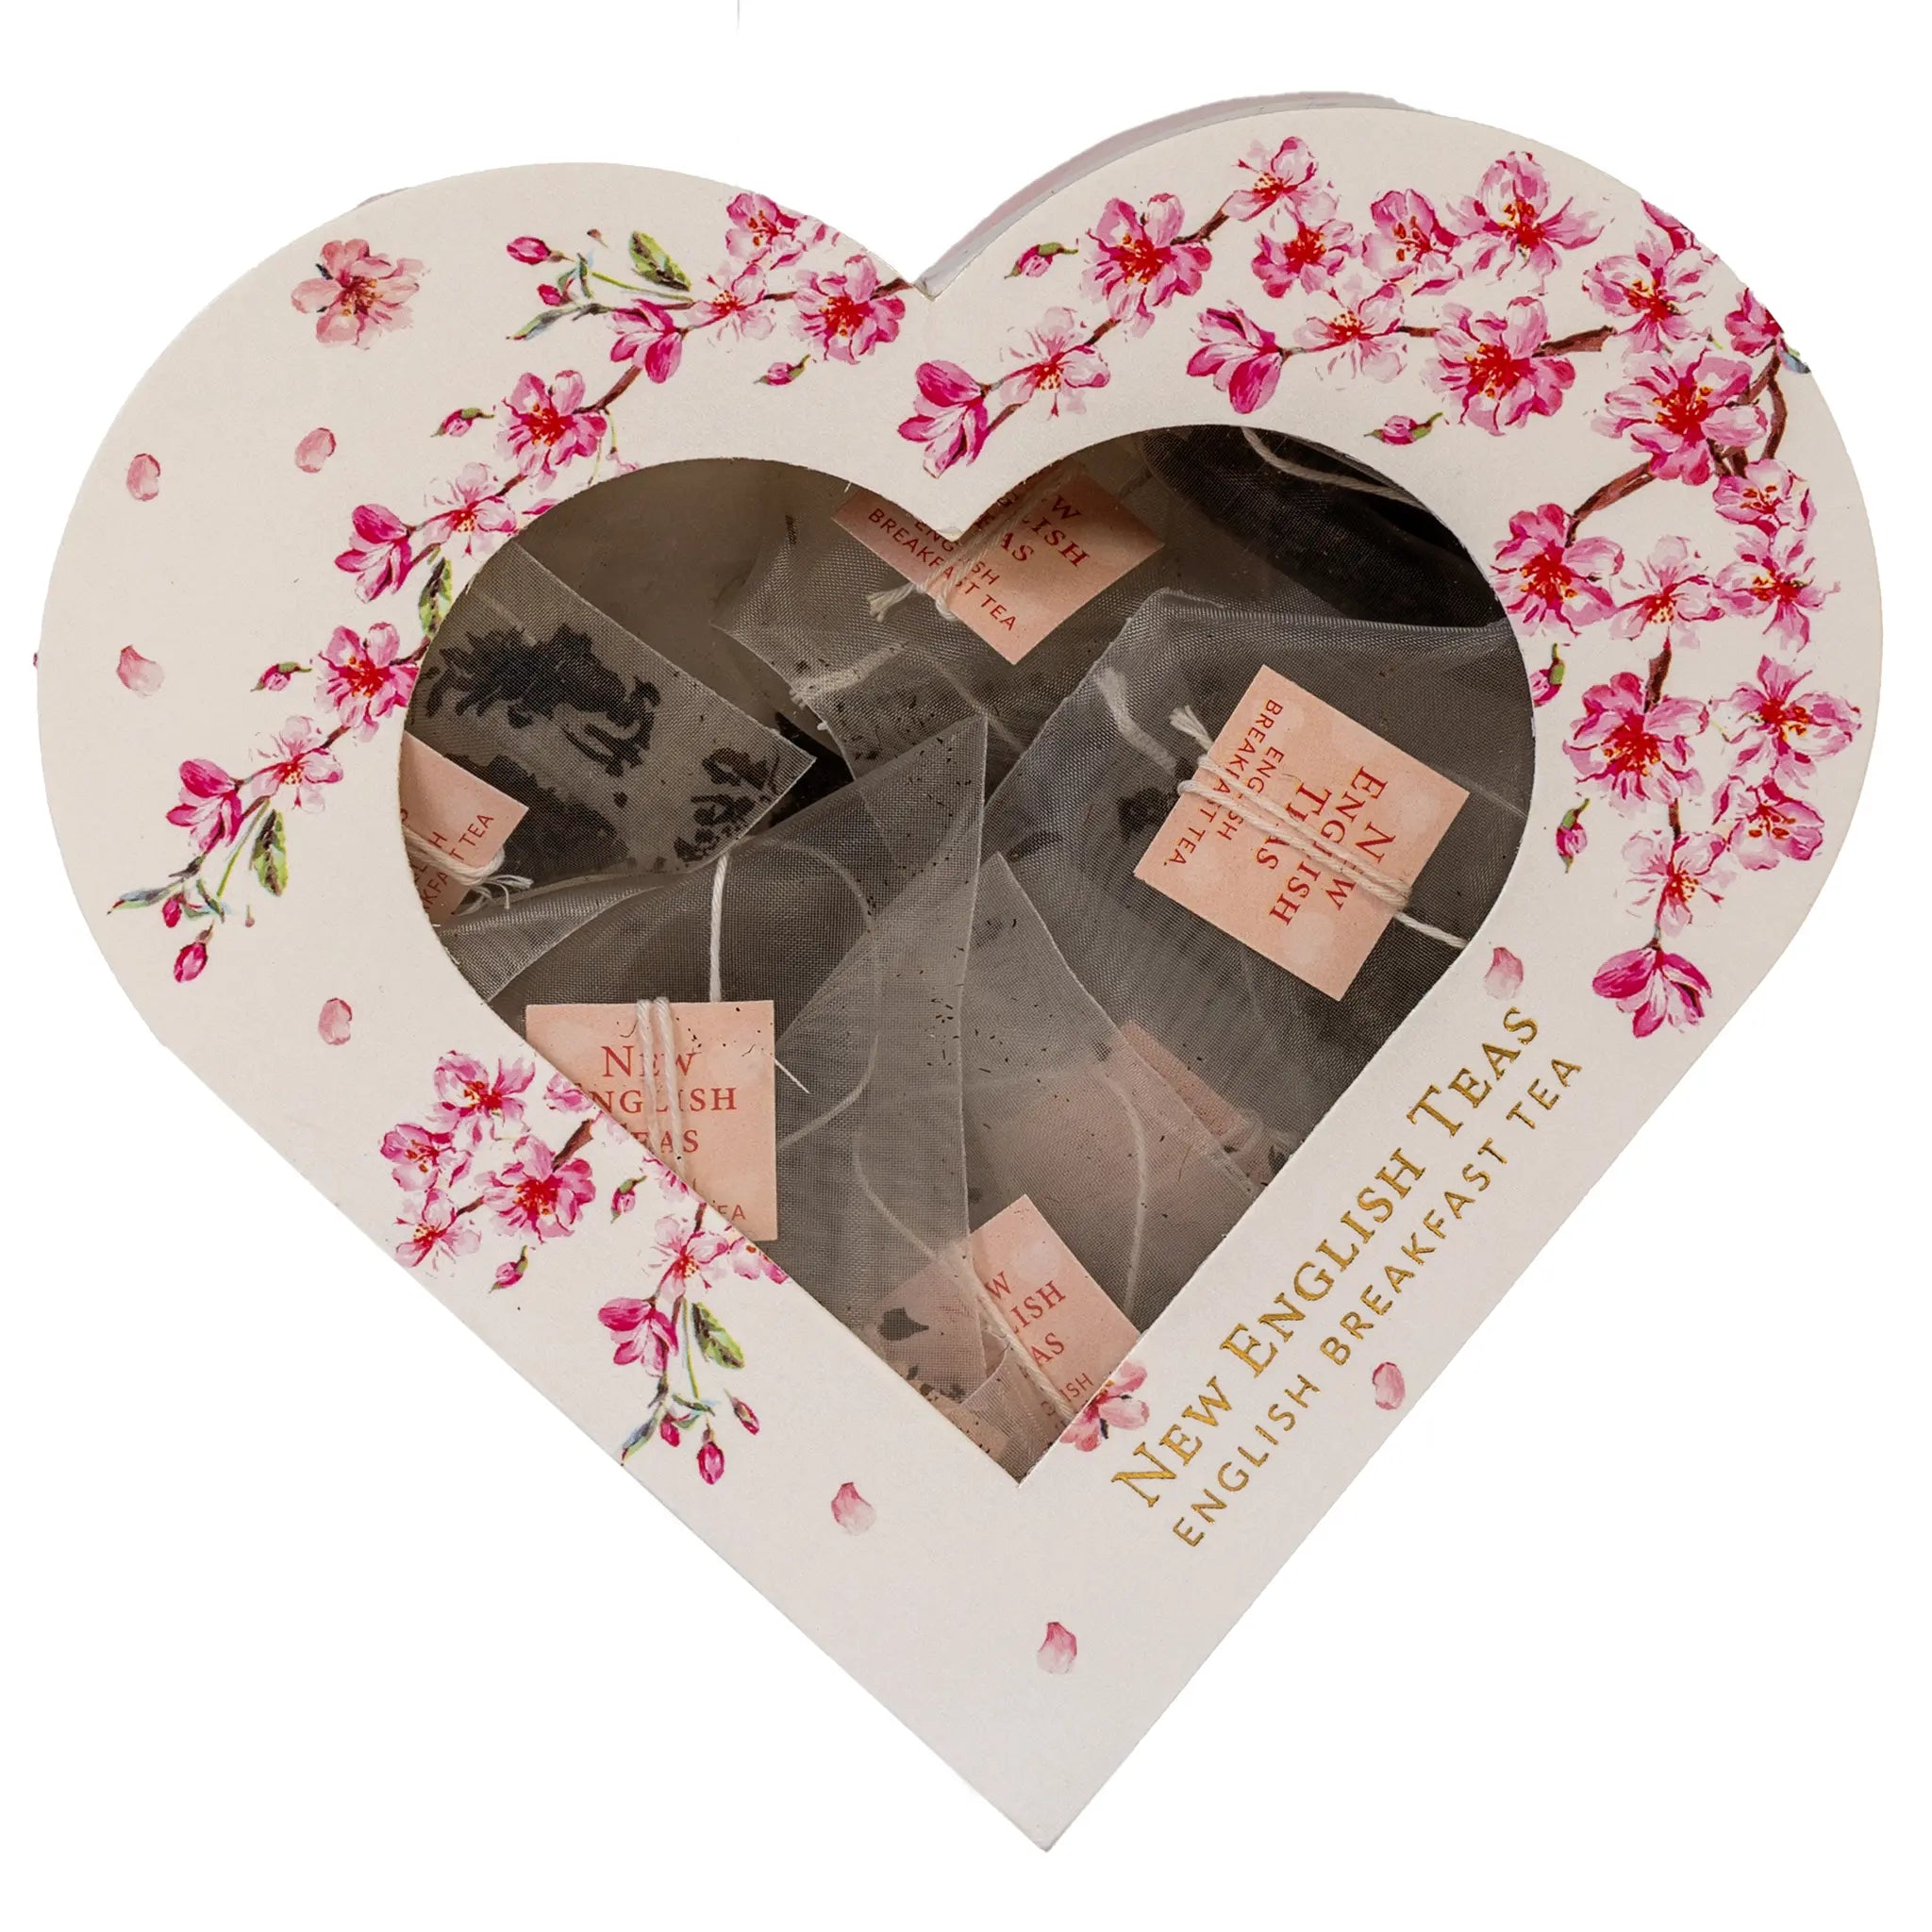 The Heart Shaped Box of Tea Gift Carton by New English Teas